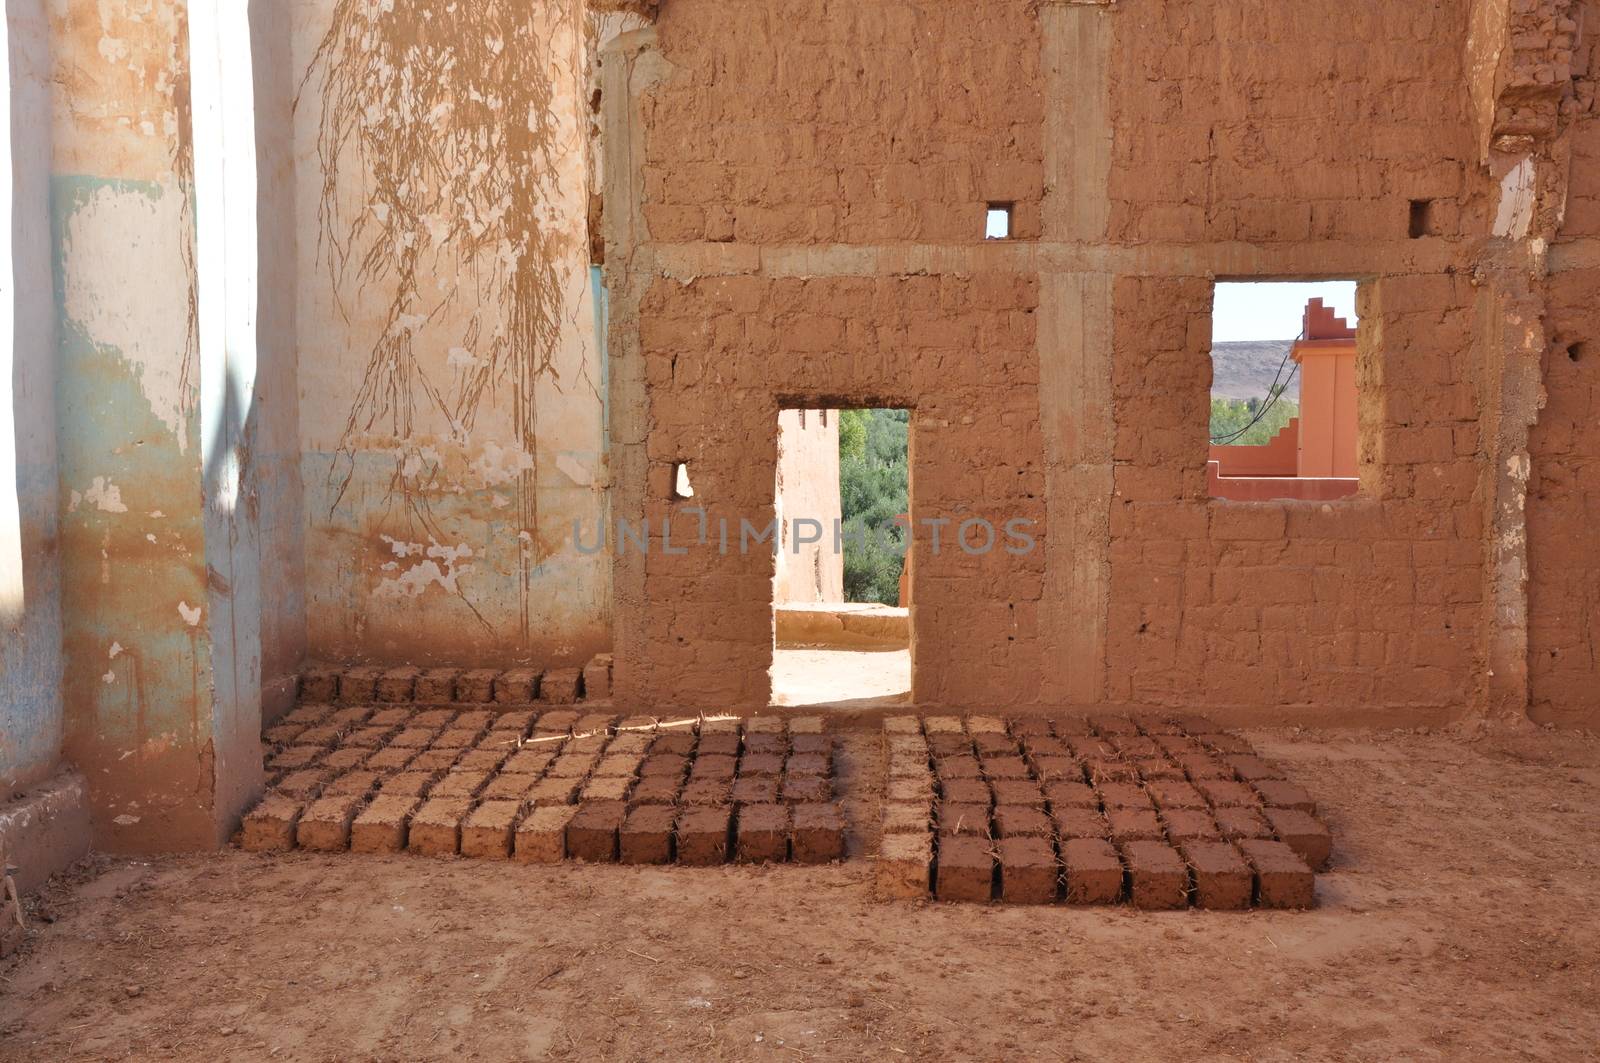 Mud bricks ready to use by anderm